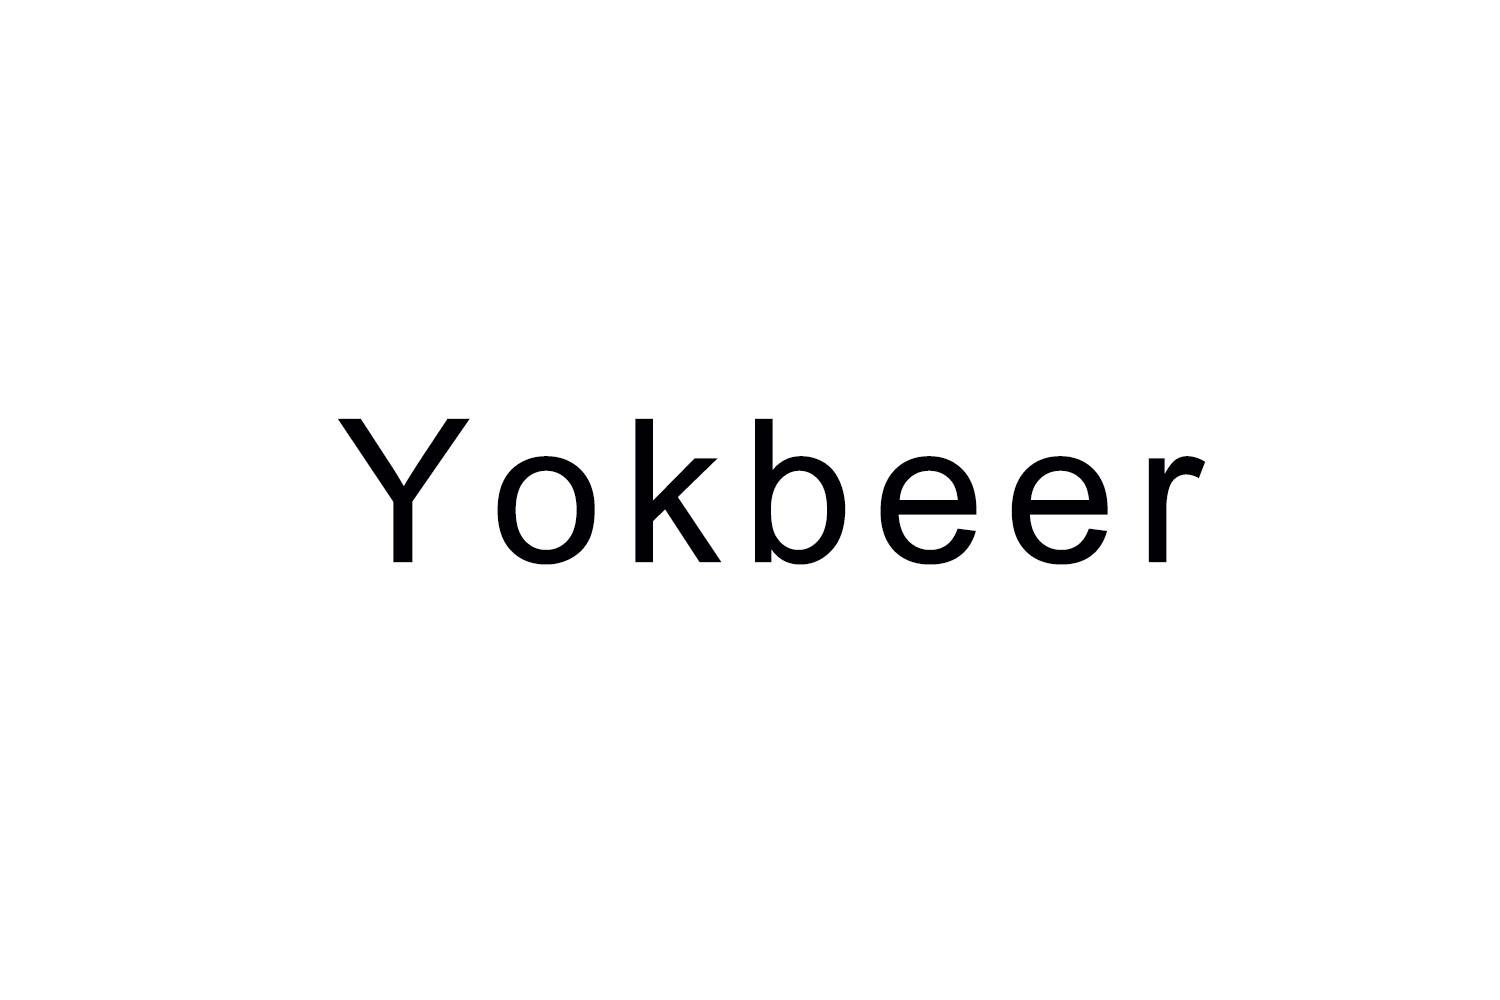 YOKBEER商标转让